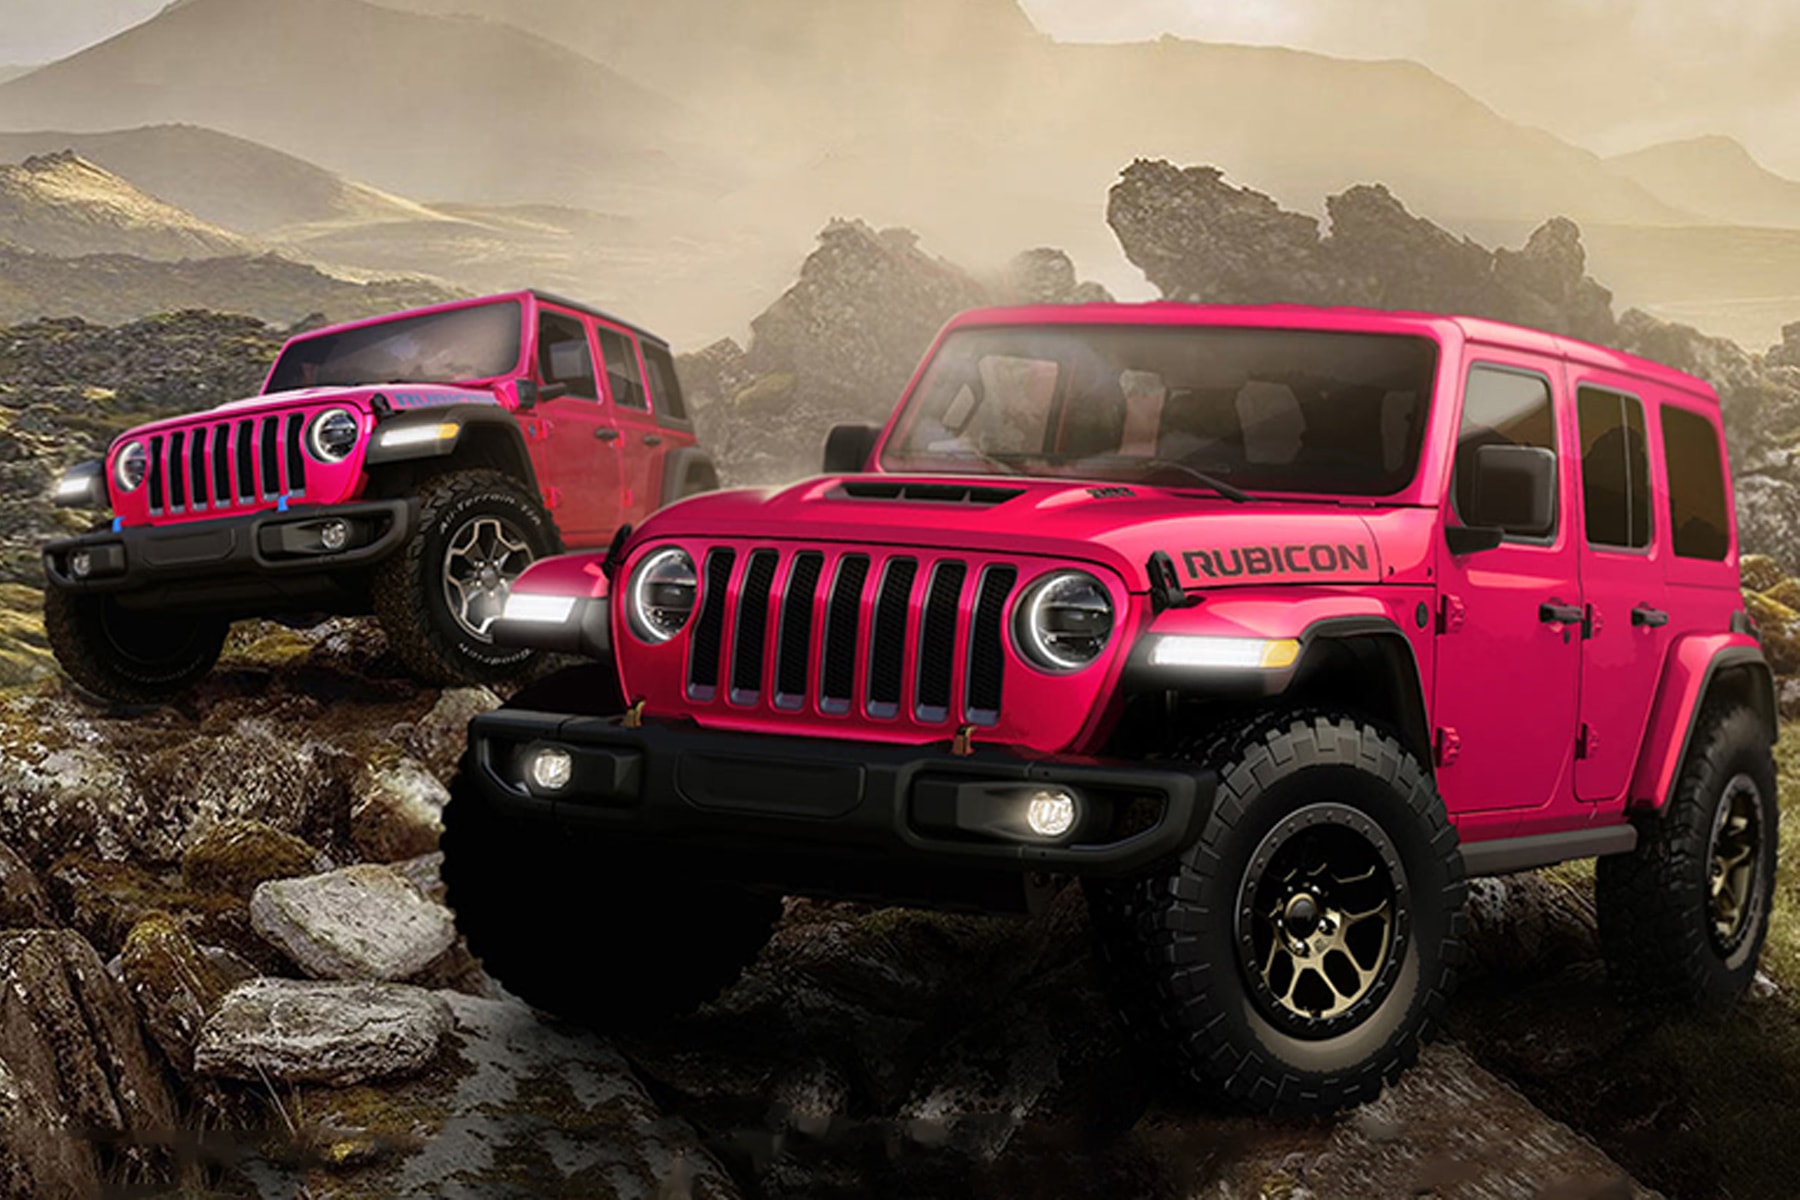 2021 年式樣 Jeep Wrangler 推出全新「Tuscadero Pink」配色車漆塗裝